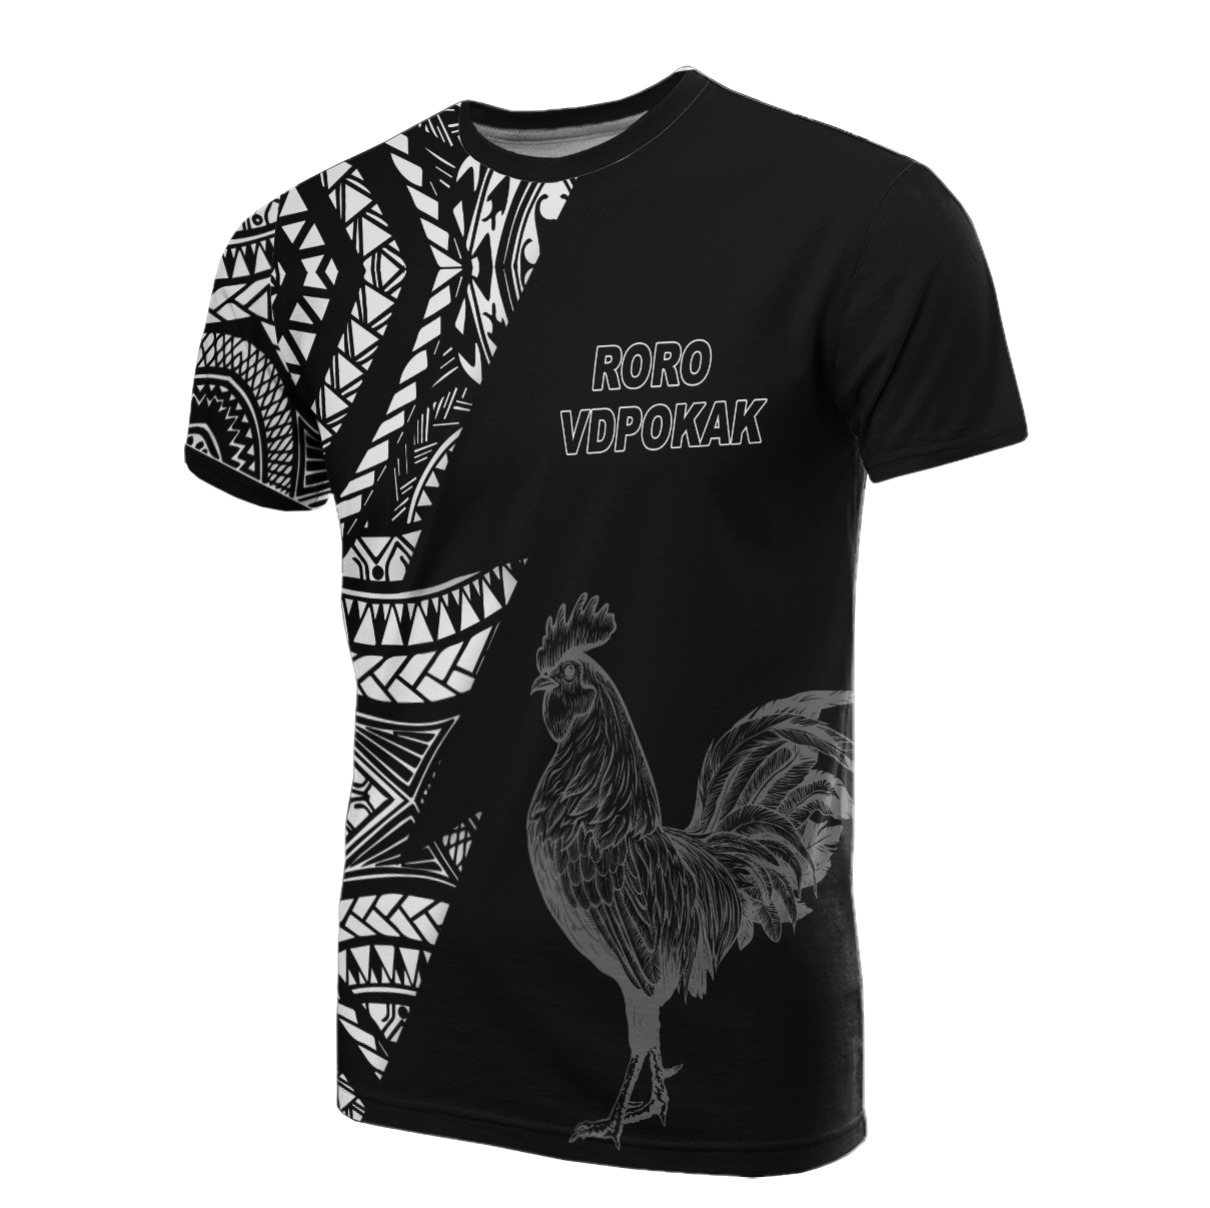 Chuuk All Over T Shirt Rooster Roro vdpokak Unisex Black - Polynesian Pride